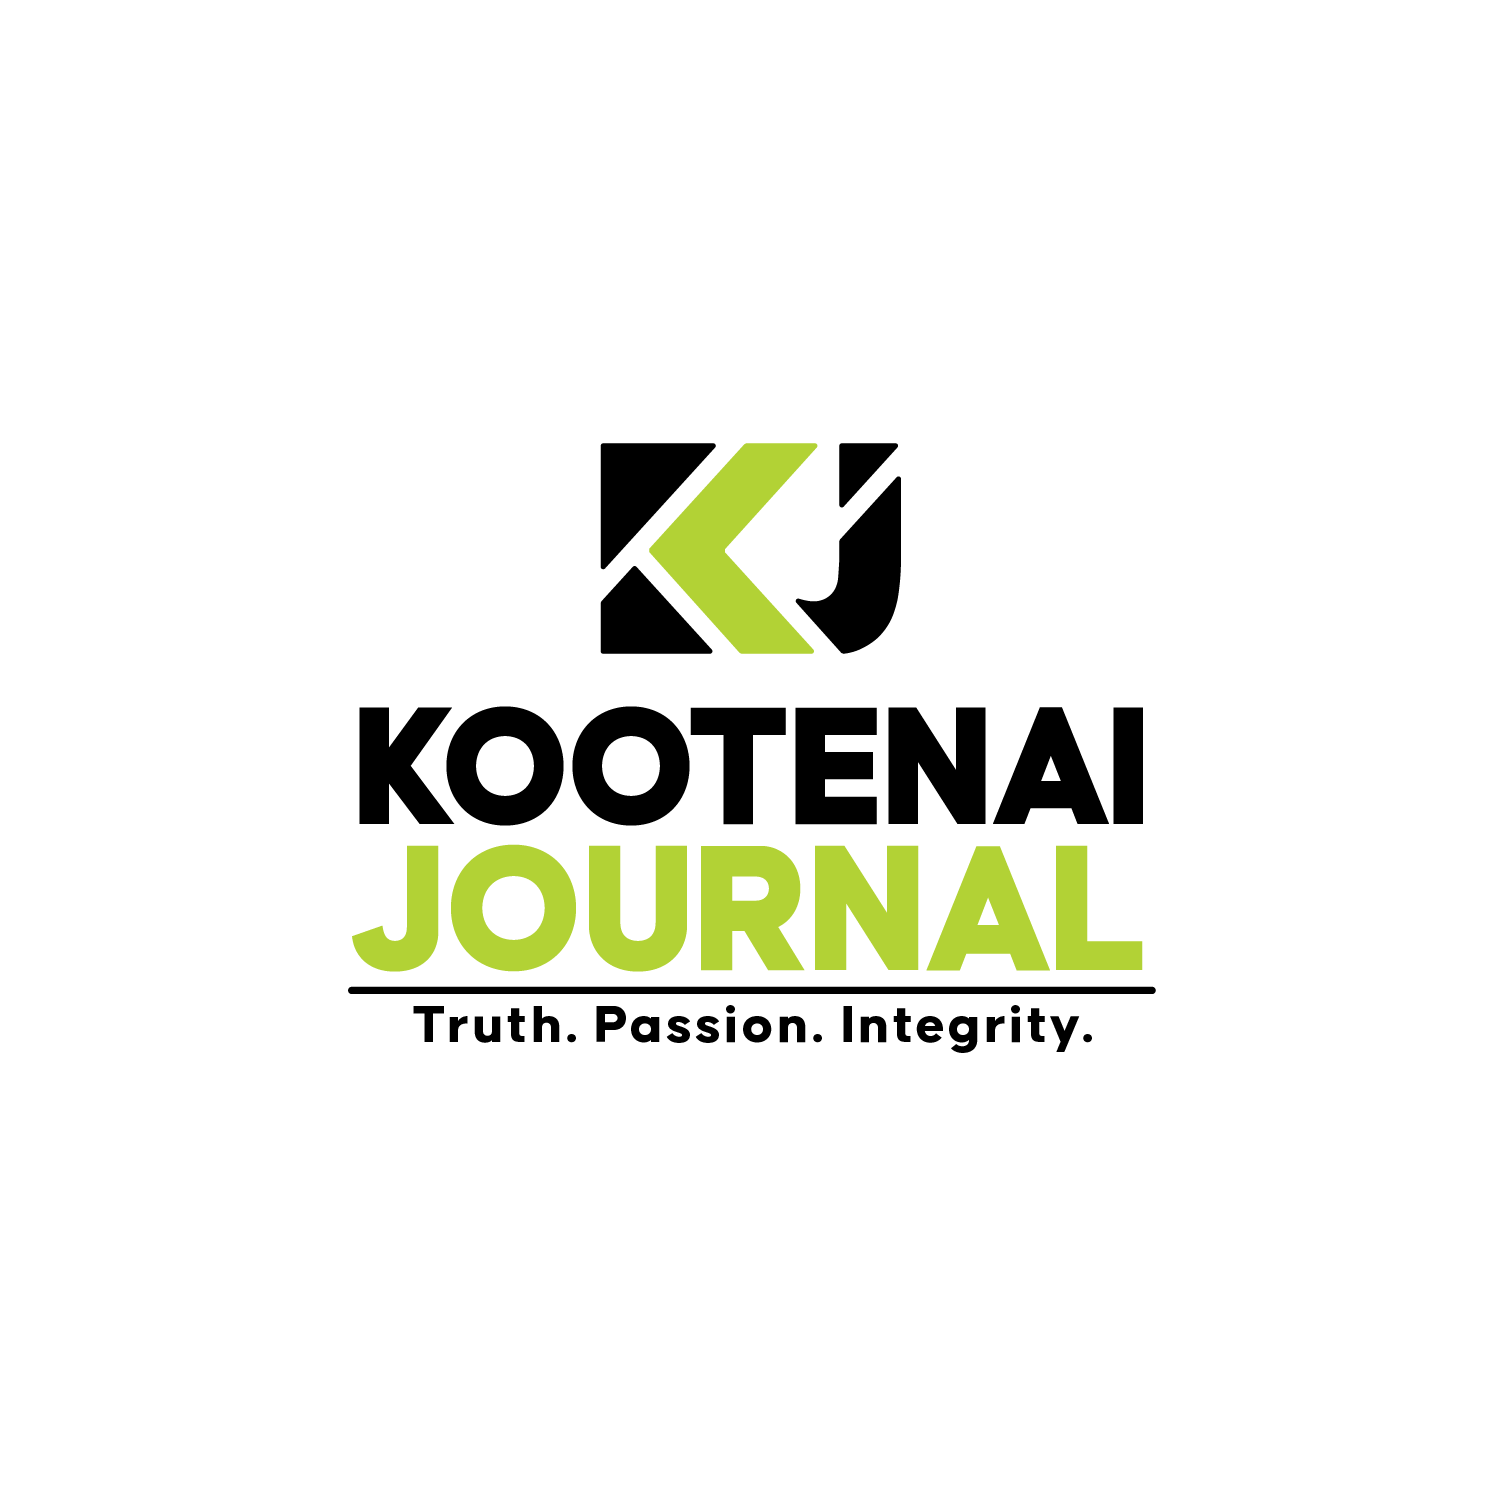 The Kootenai Journal • Kootenai Journal Logos on Transparent Bkgrnd-06